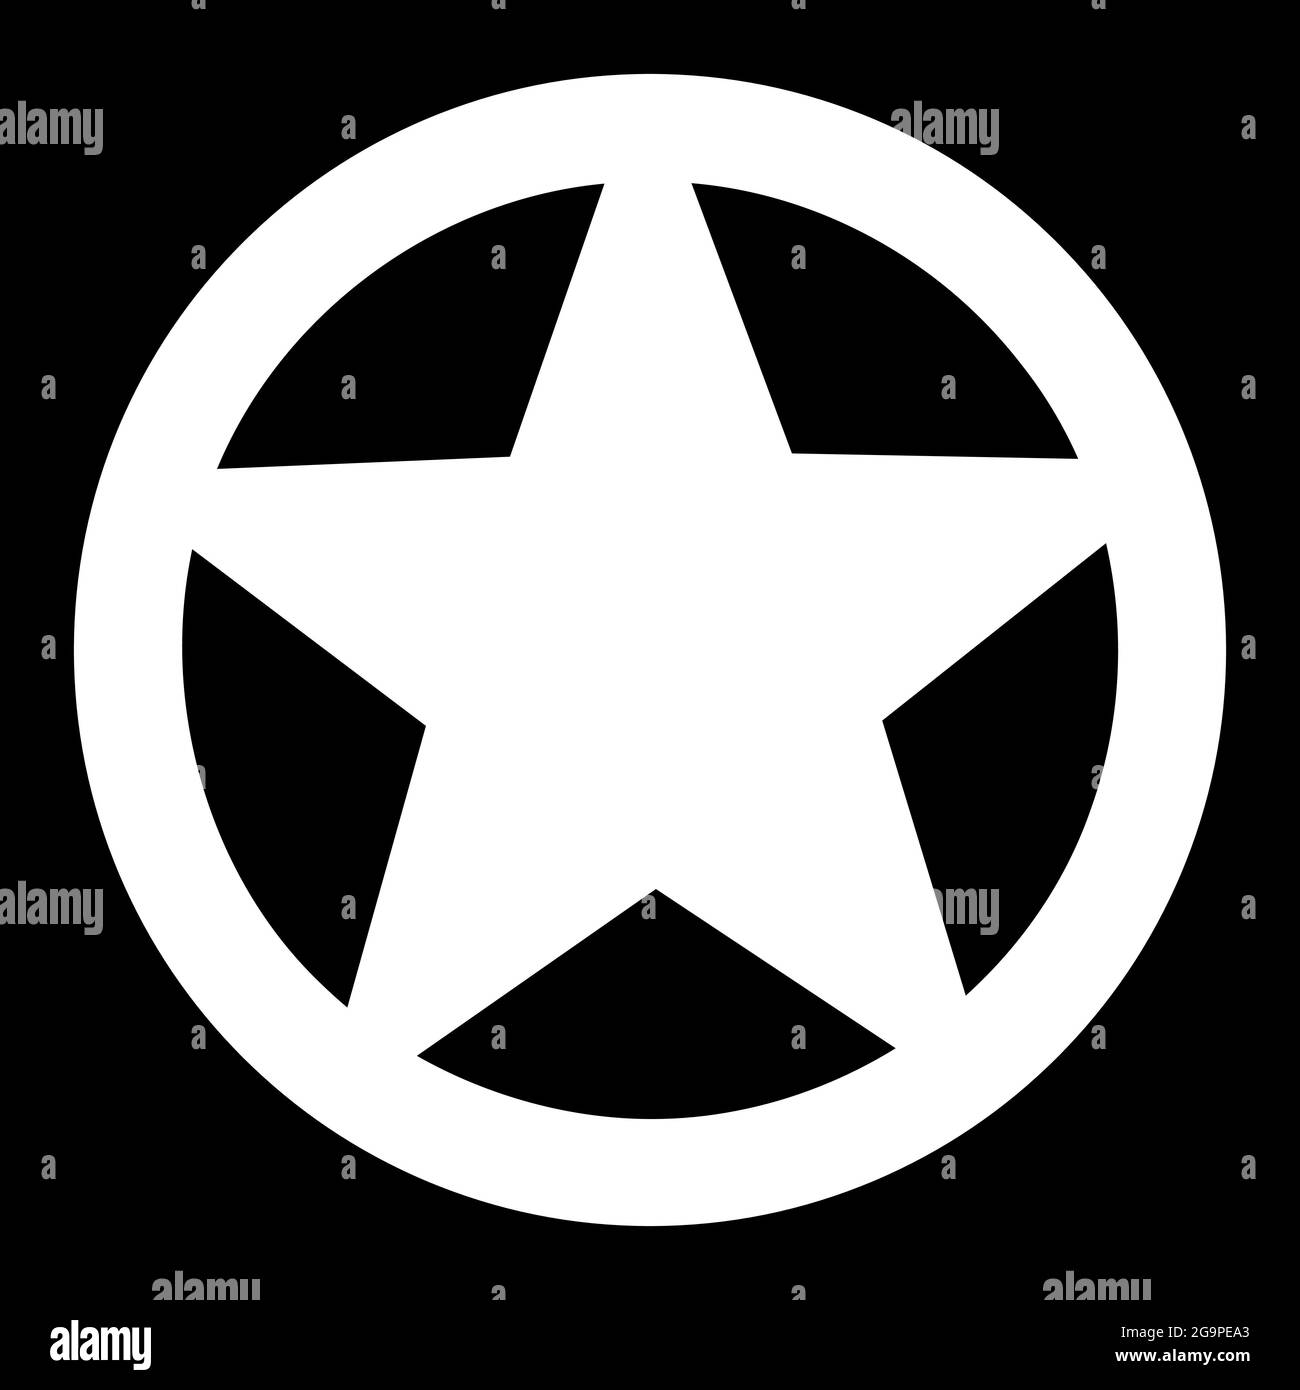 Sheriff's badge, star icon, design element. Deputy, police bade – stock vector illustration, clip-art graphics Stock Vector